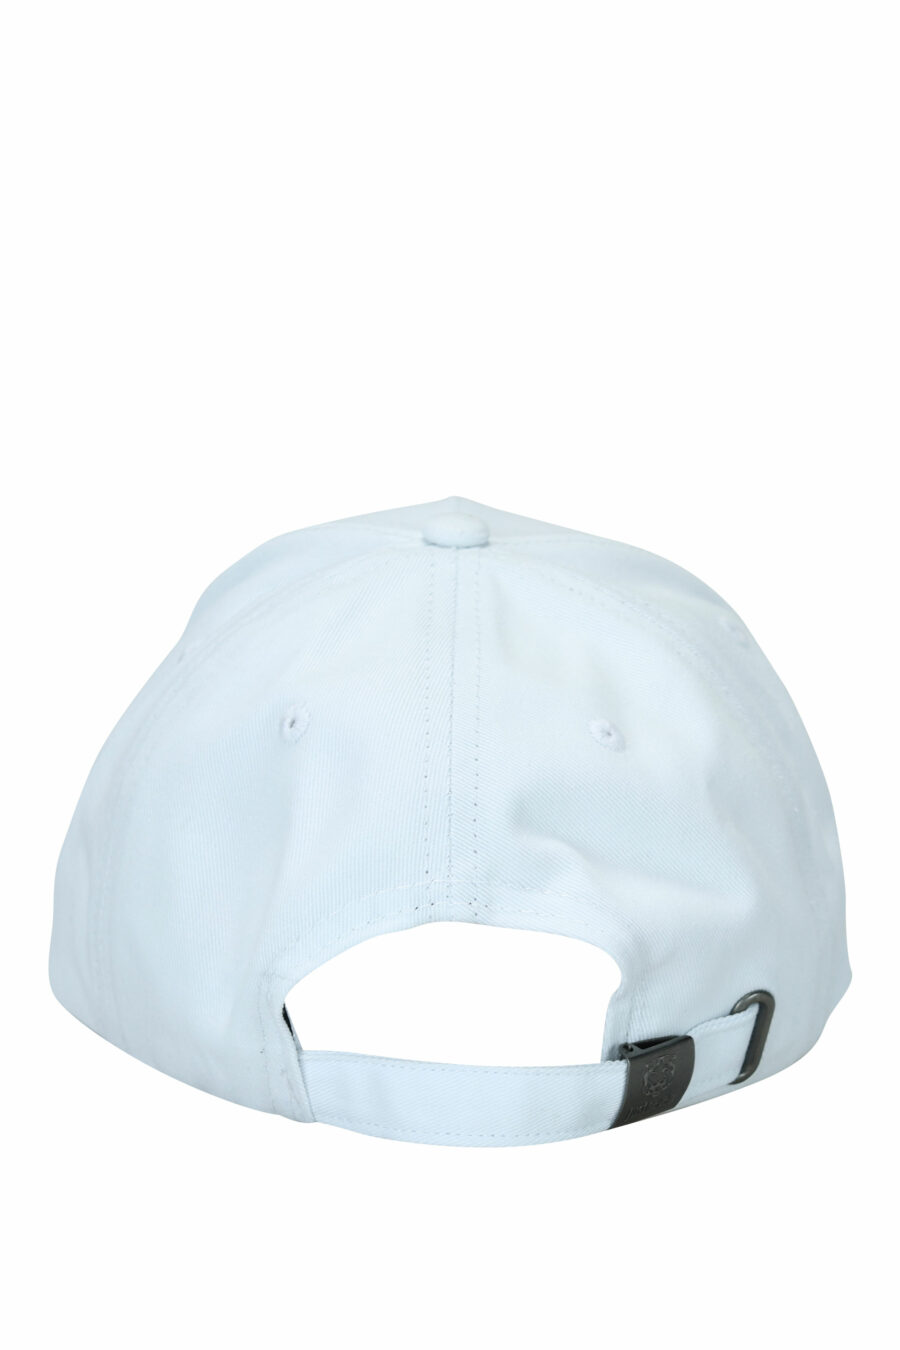 White cap with silver tiger logo - 8052672742308 1